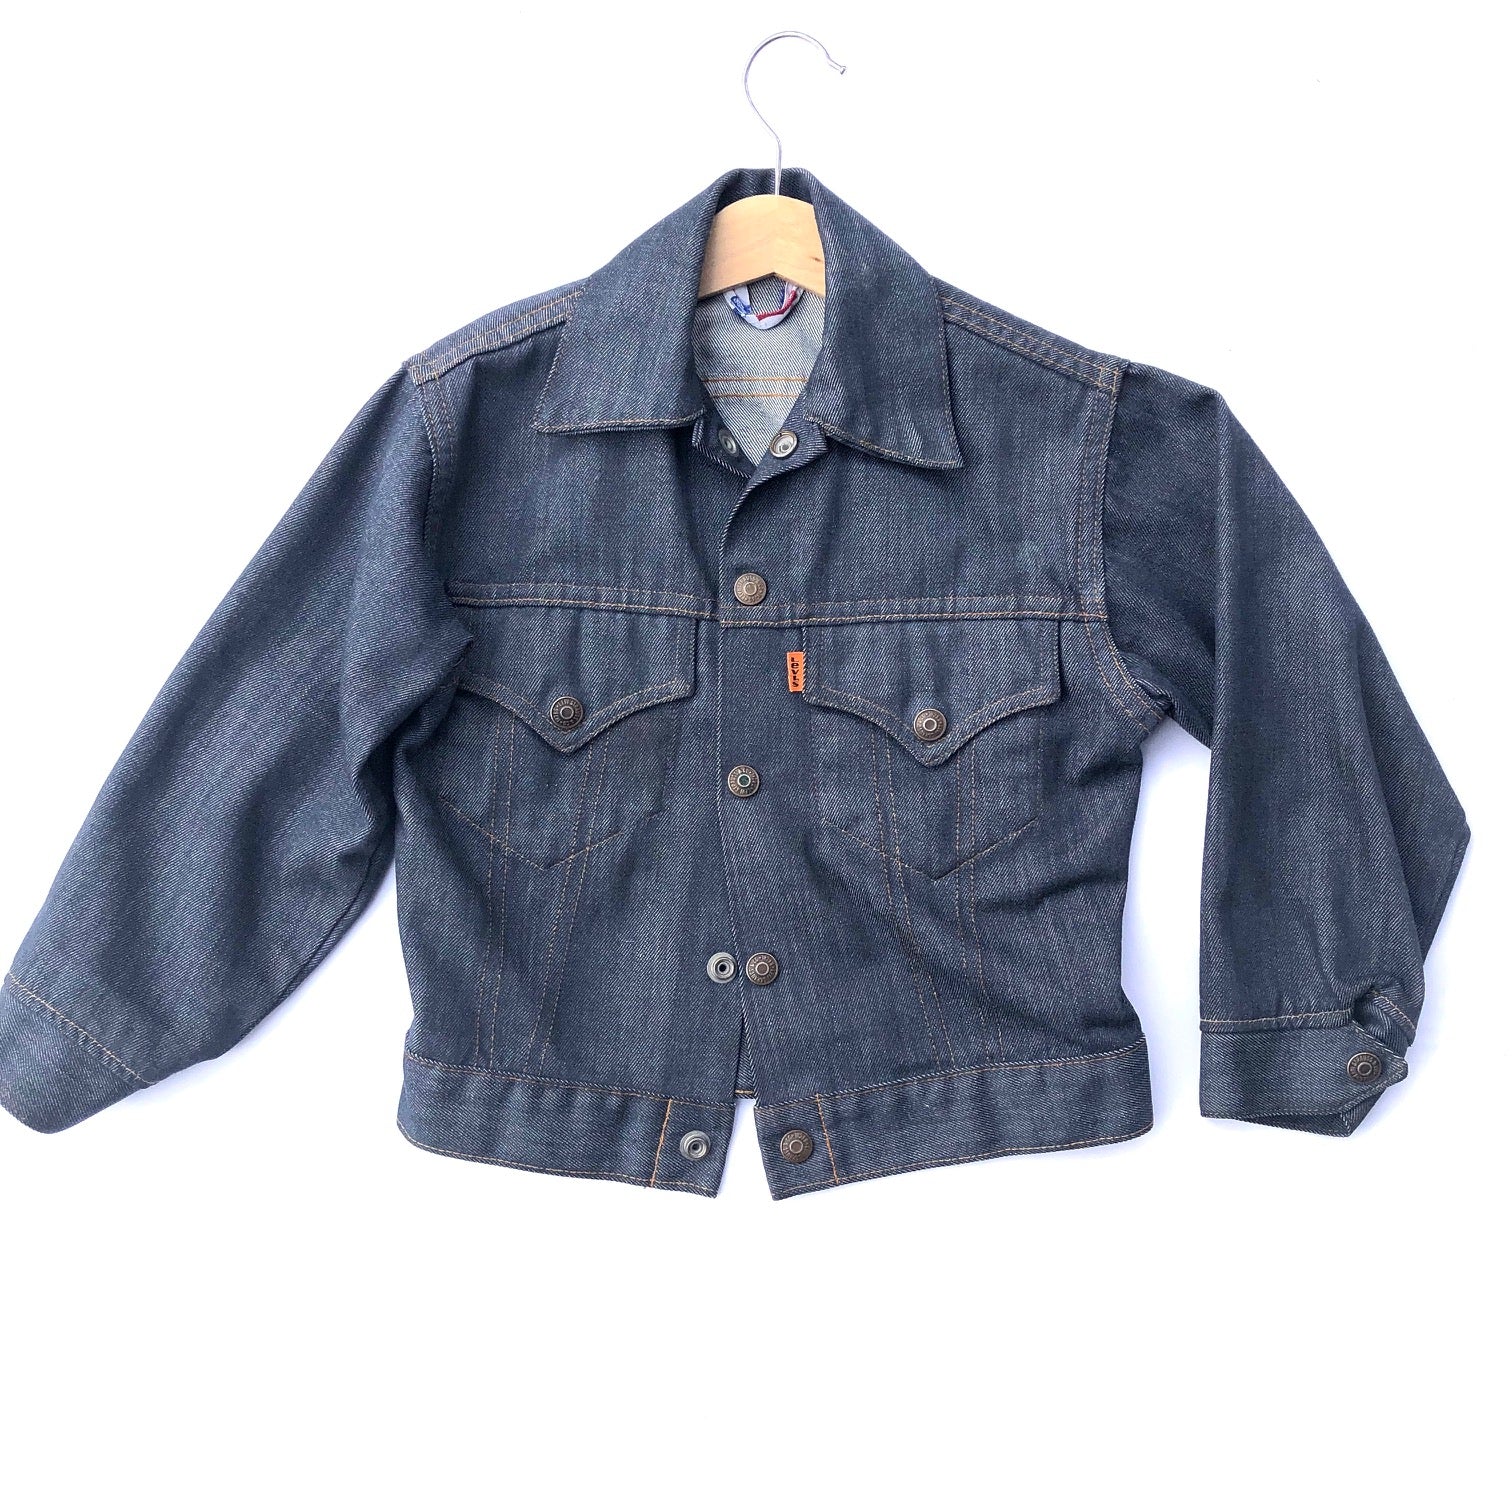 Vintage Levis jacket size 5-6